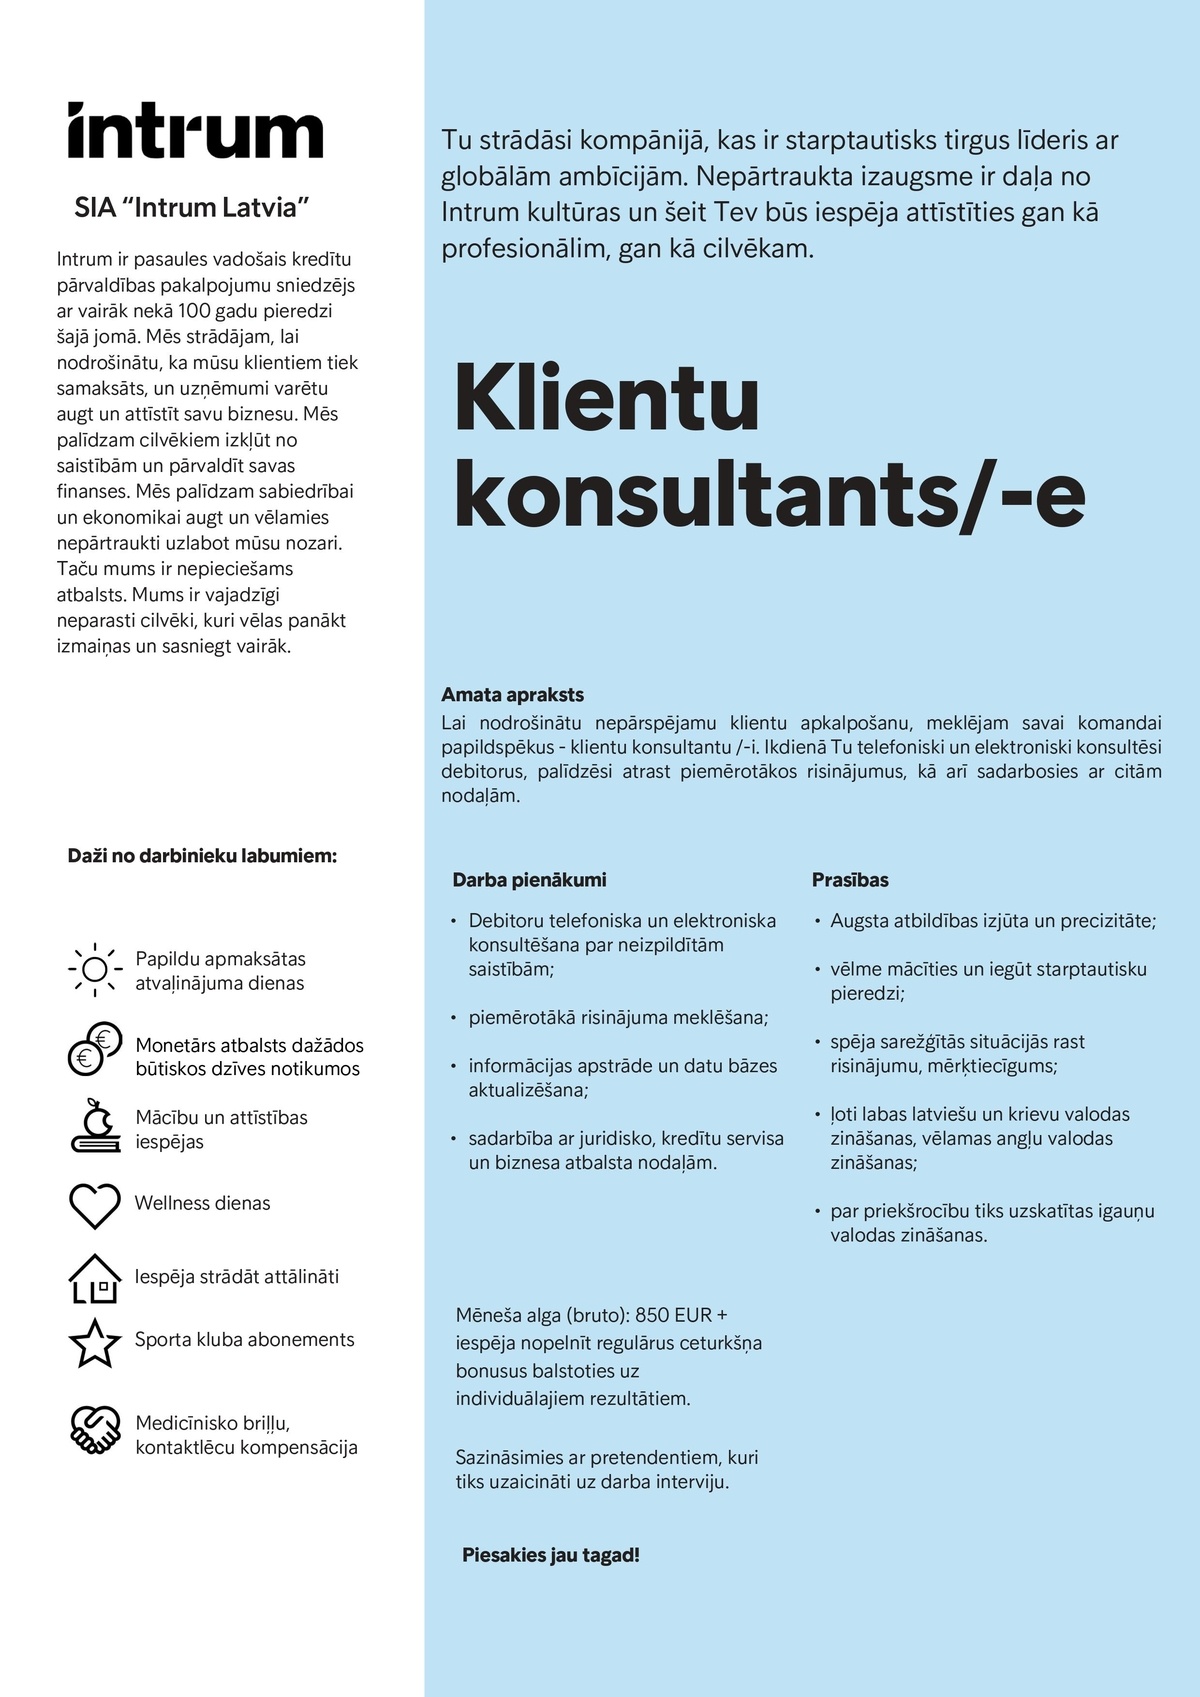 Intrum Latvia, SIA Klientu konsultants/-e